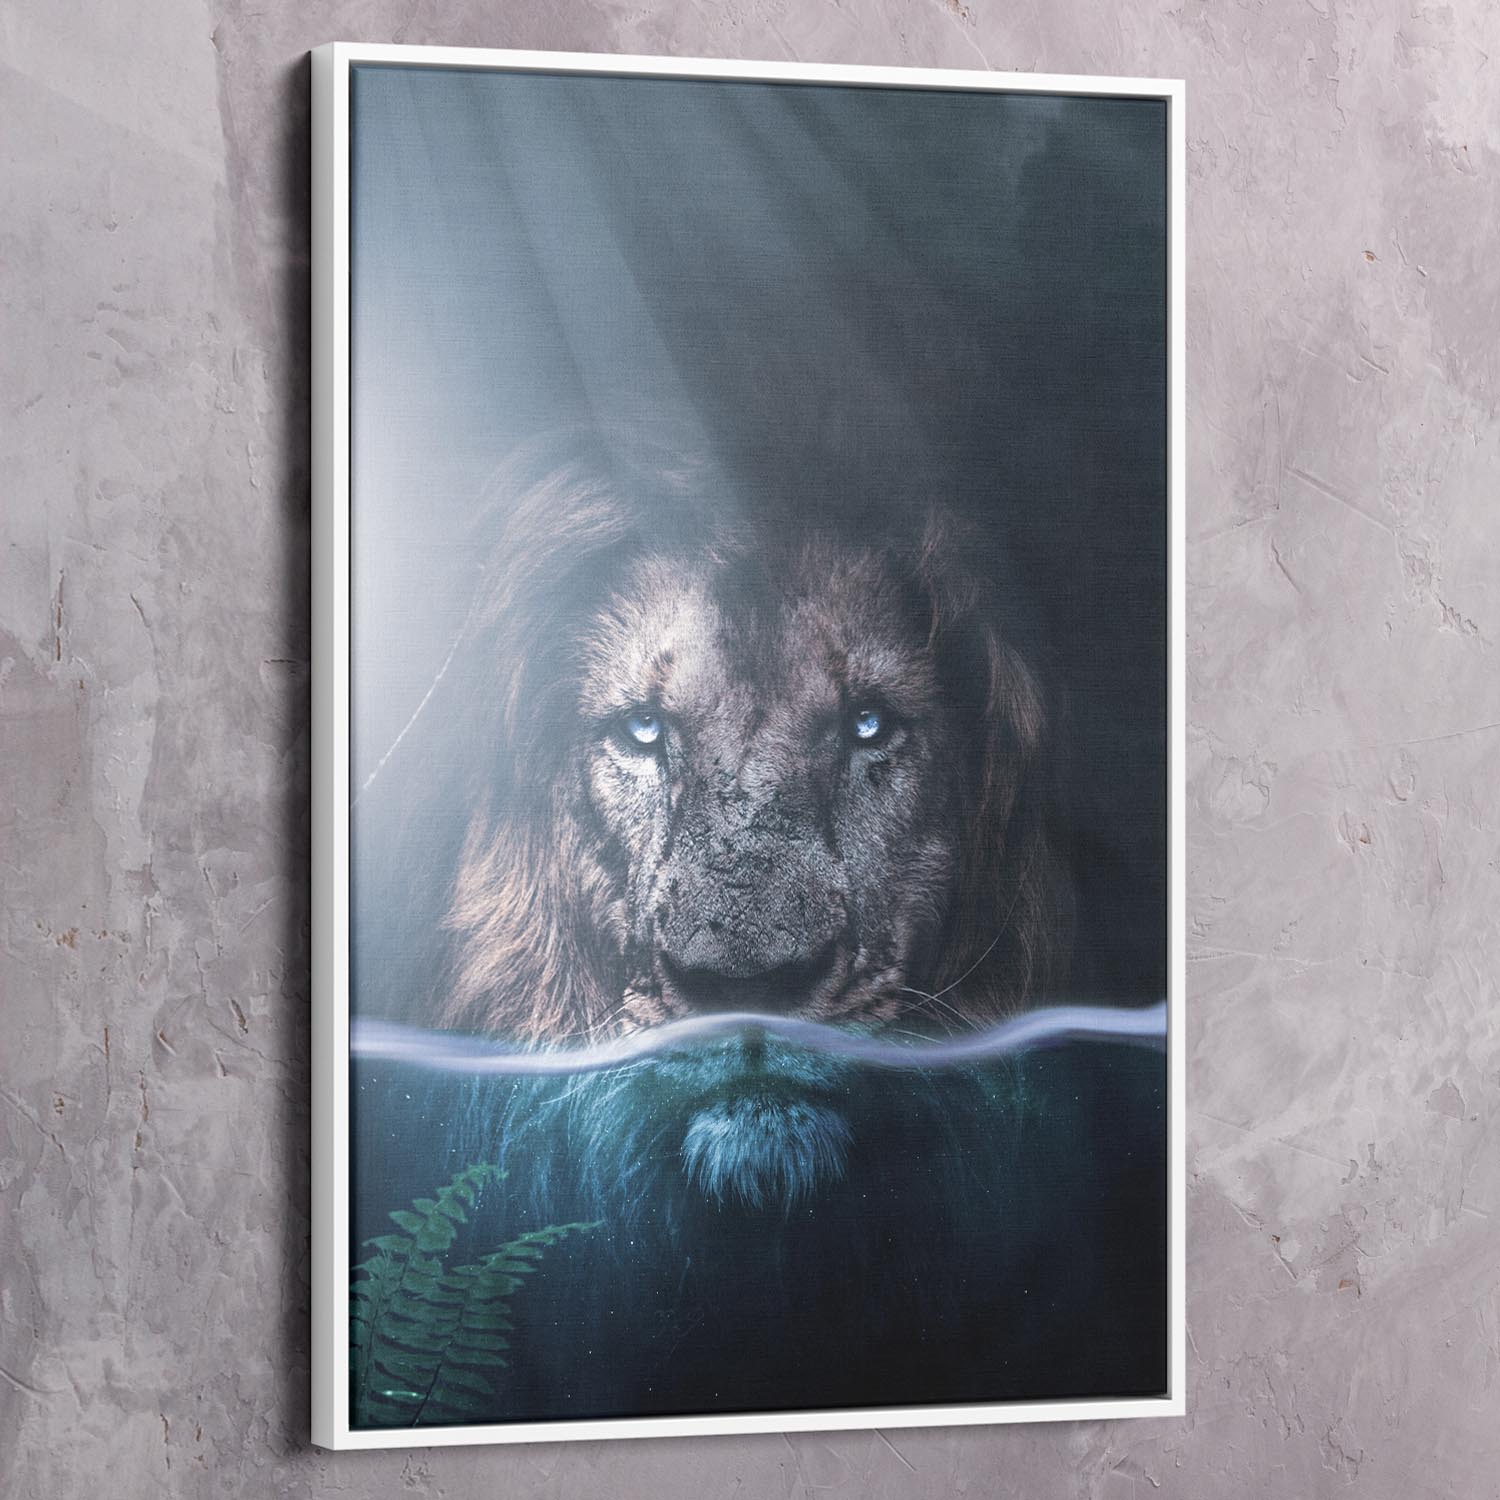 Underwater Lion Wall Art | Inspirational Wall Art Motivational Wall Art Quotes Office Art | ImpaktMaker Exclusive Canvas Art Portrait